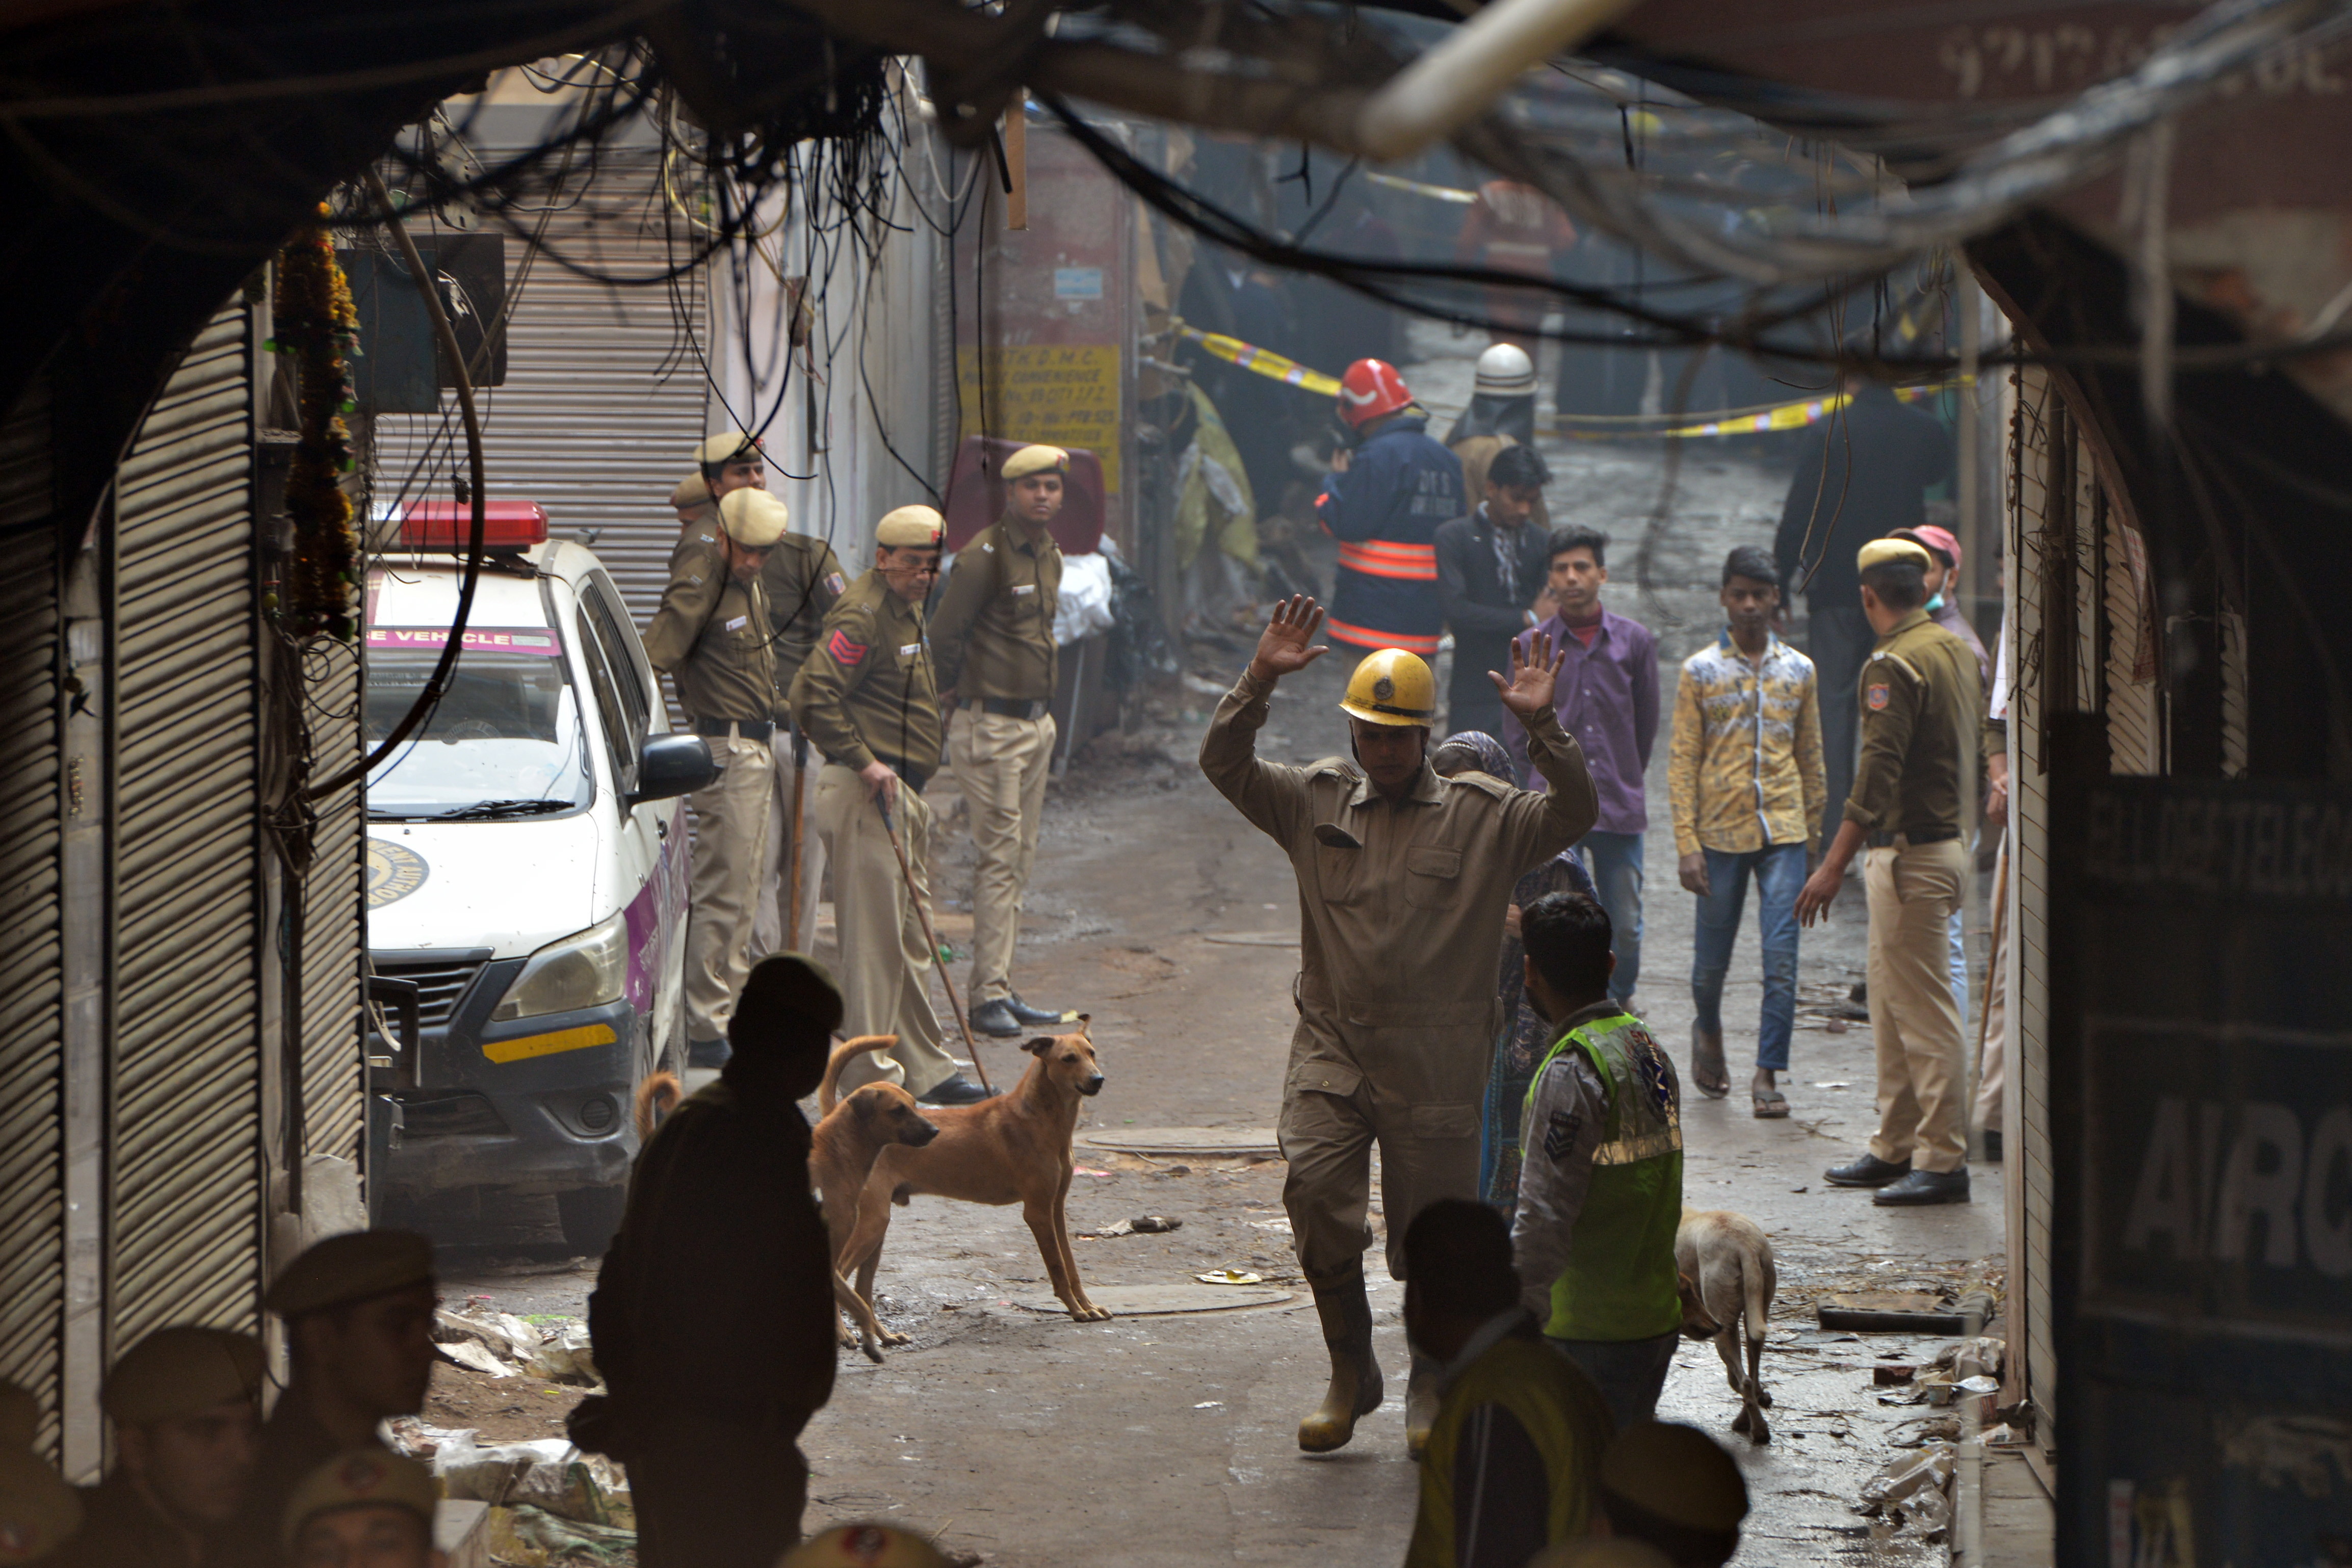 43 de persoane au murit din cauza unui incendiu la o fabrică din New Delhi, India